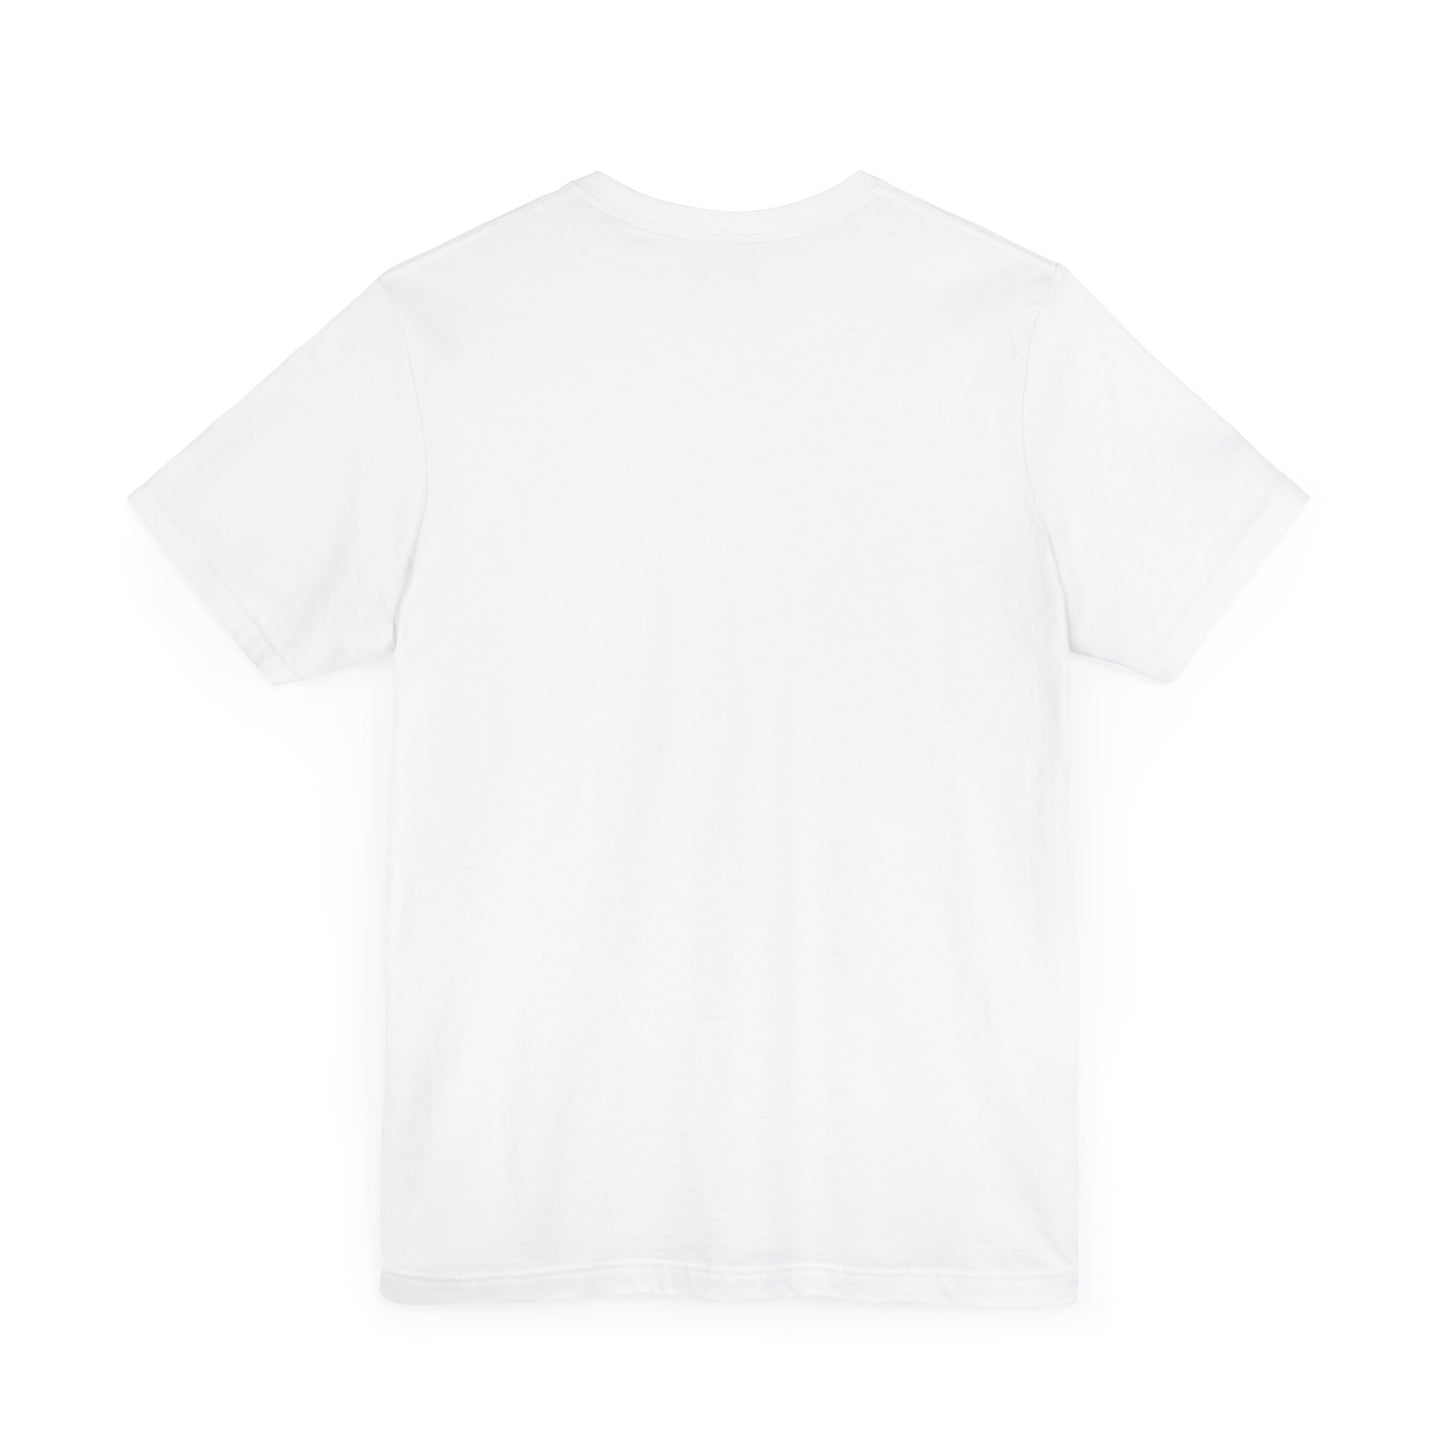 moonturtle.io silk road t-shirt Unisex Jersey Short Sleeve Tee